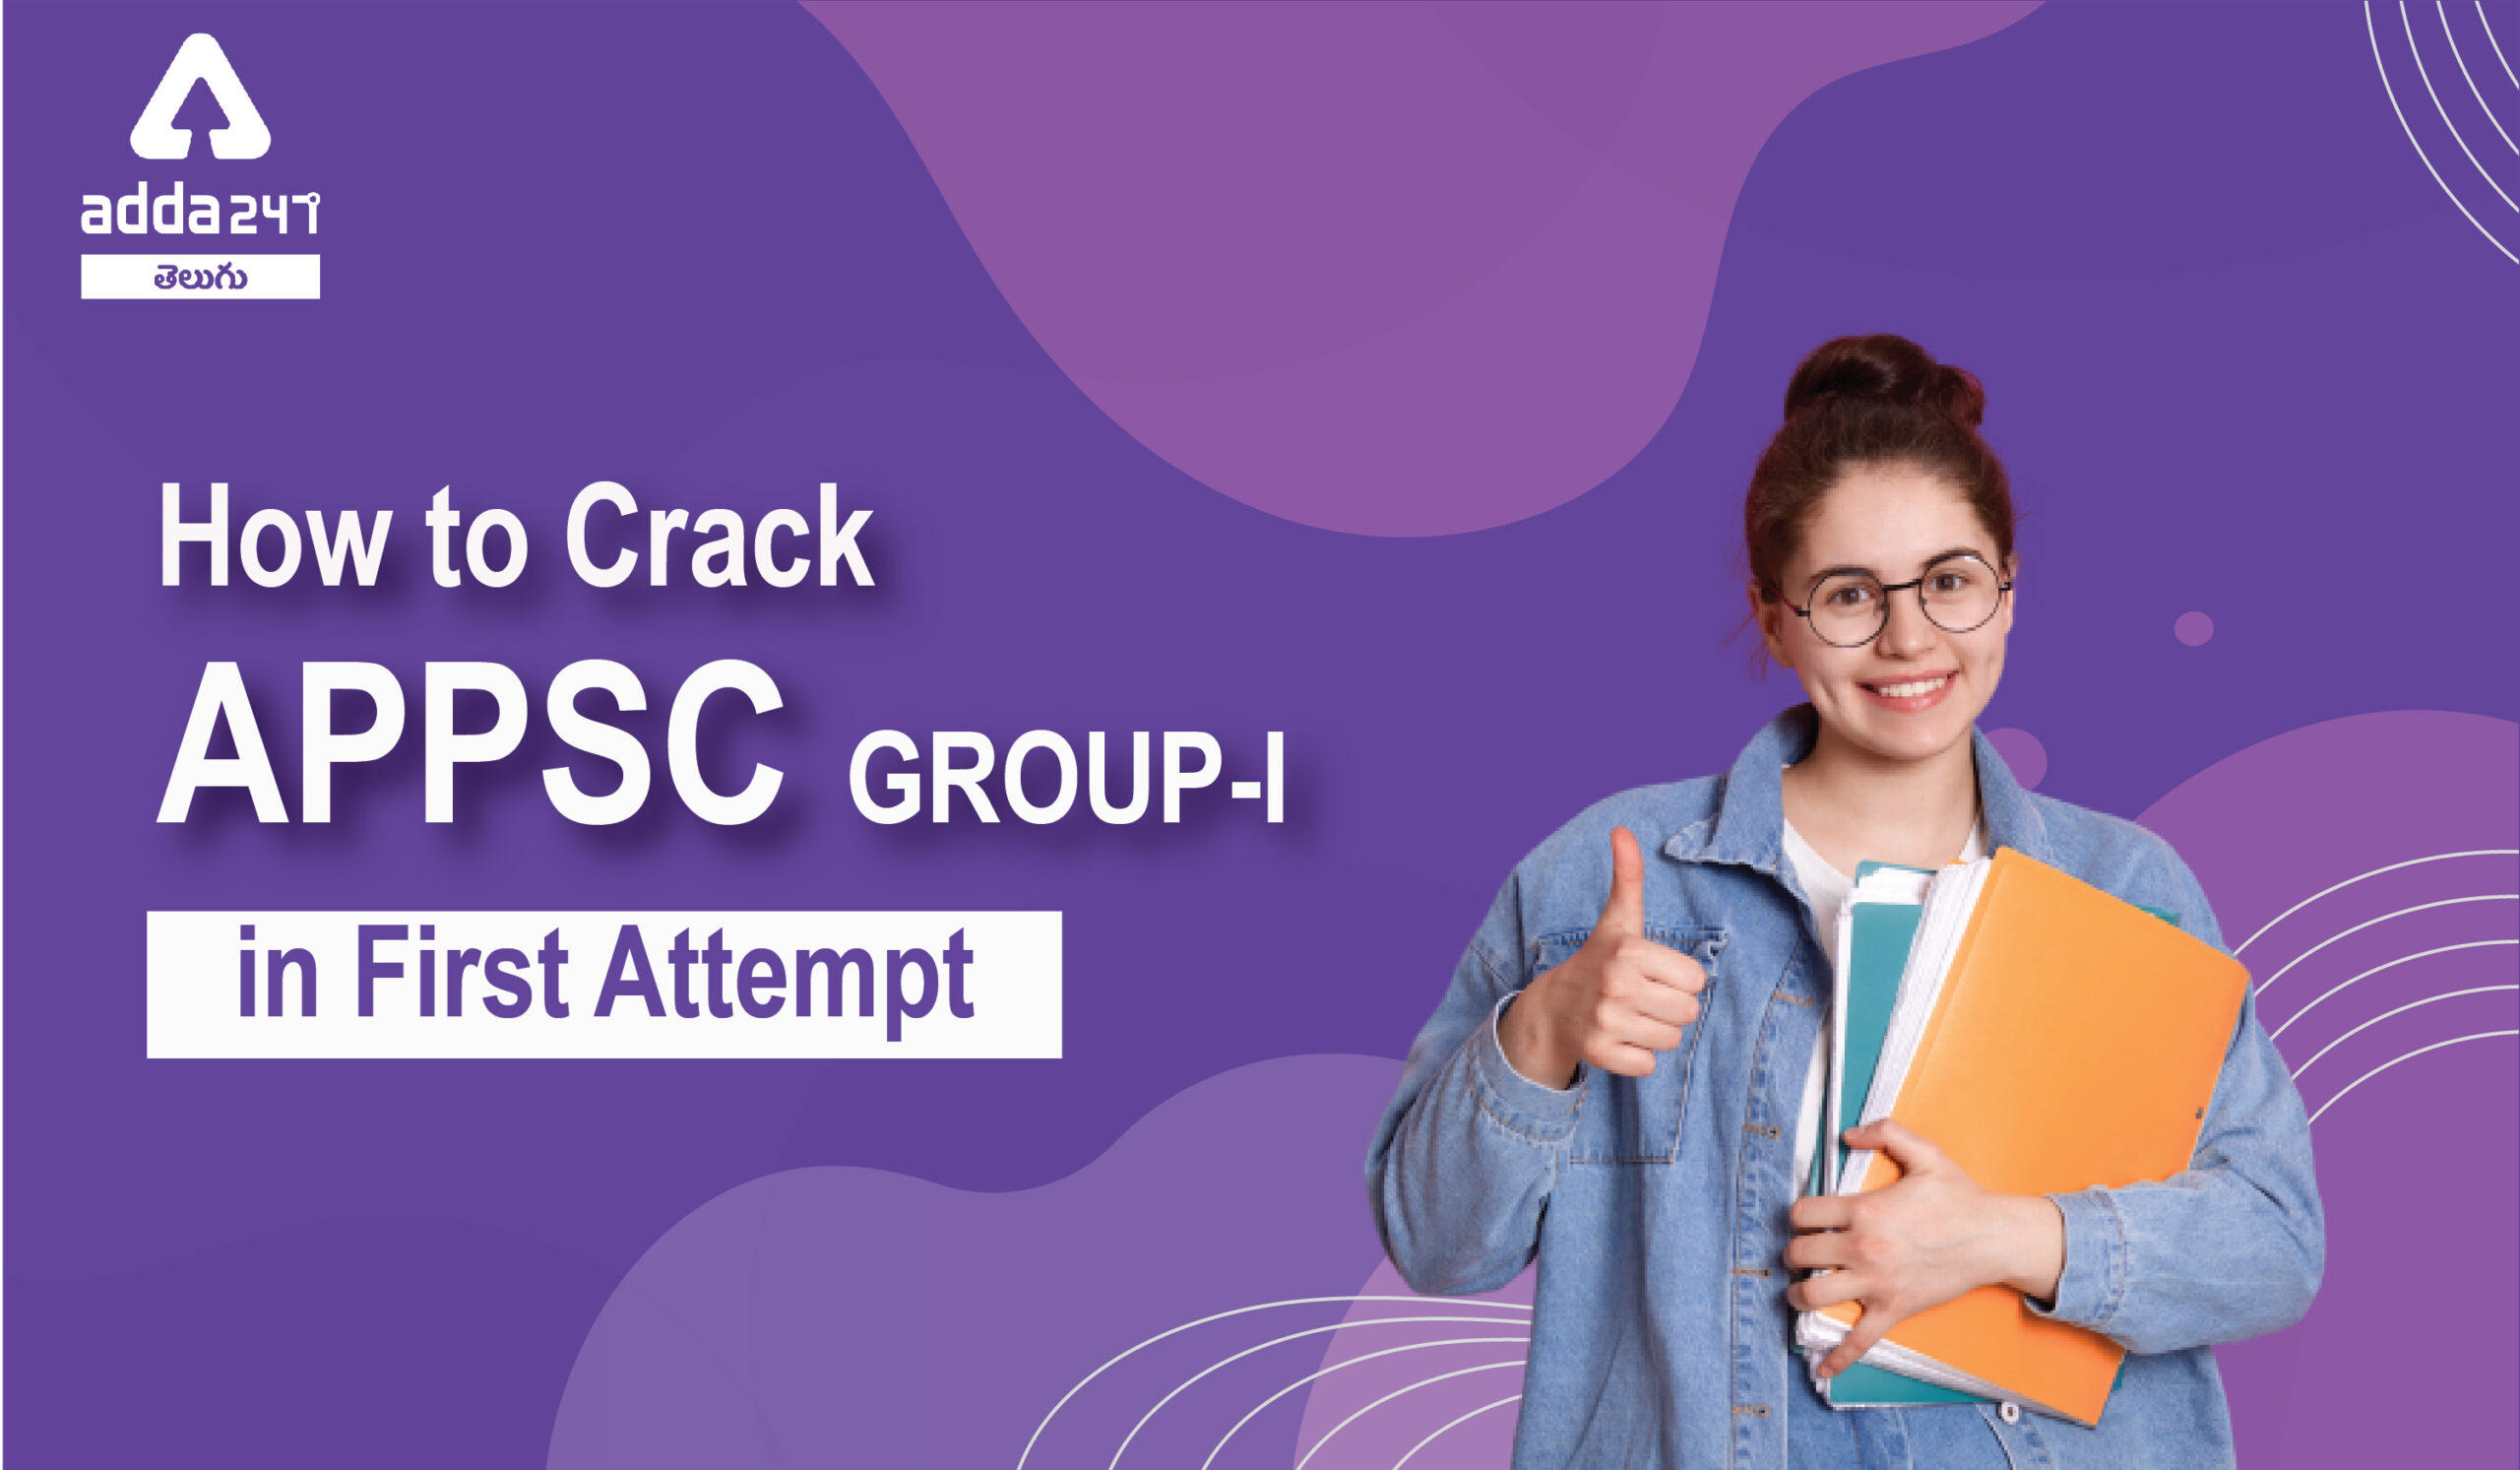 How to prepare for APPSC Group-1 | మొదటి ప్రయత్నంలోనే APPSC గ్రూప్-1 సాధించడం ఎలా? |_30.1